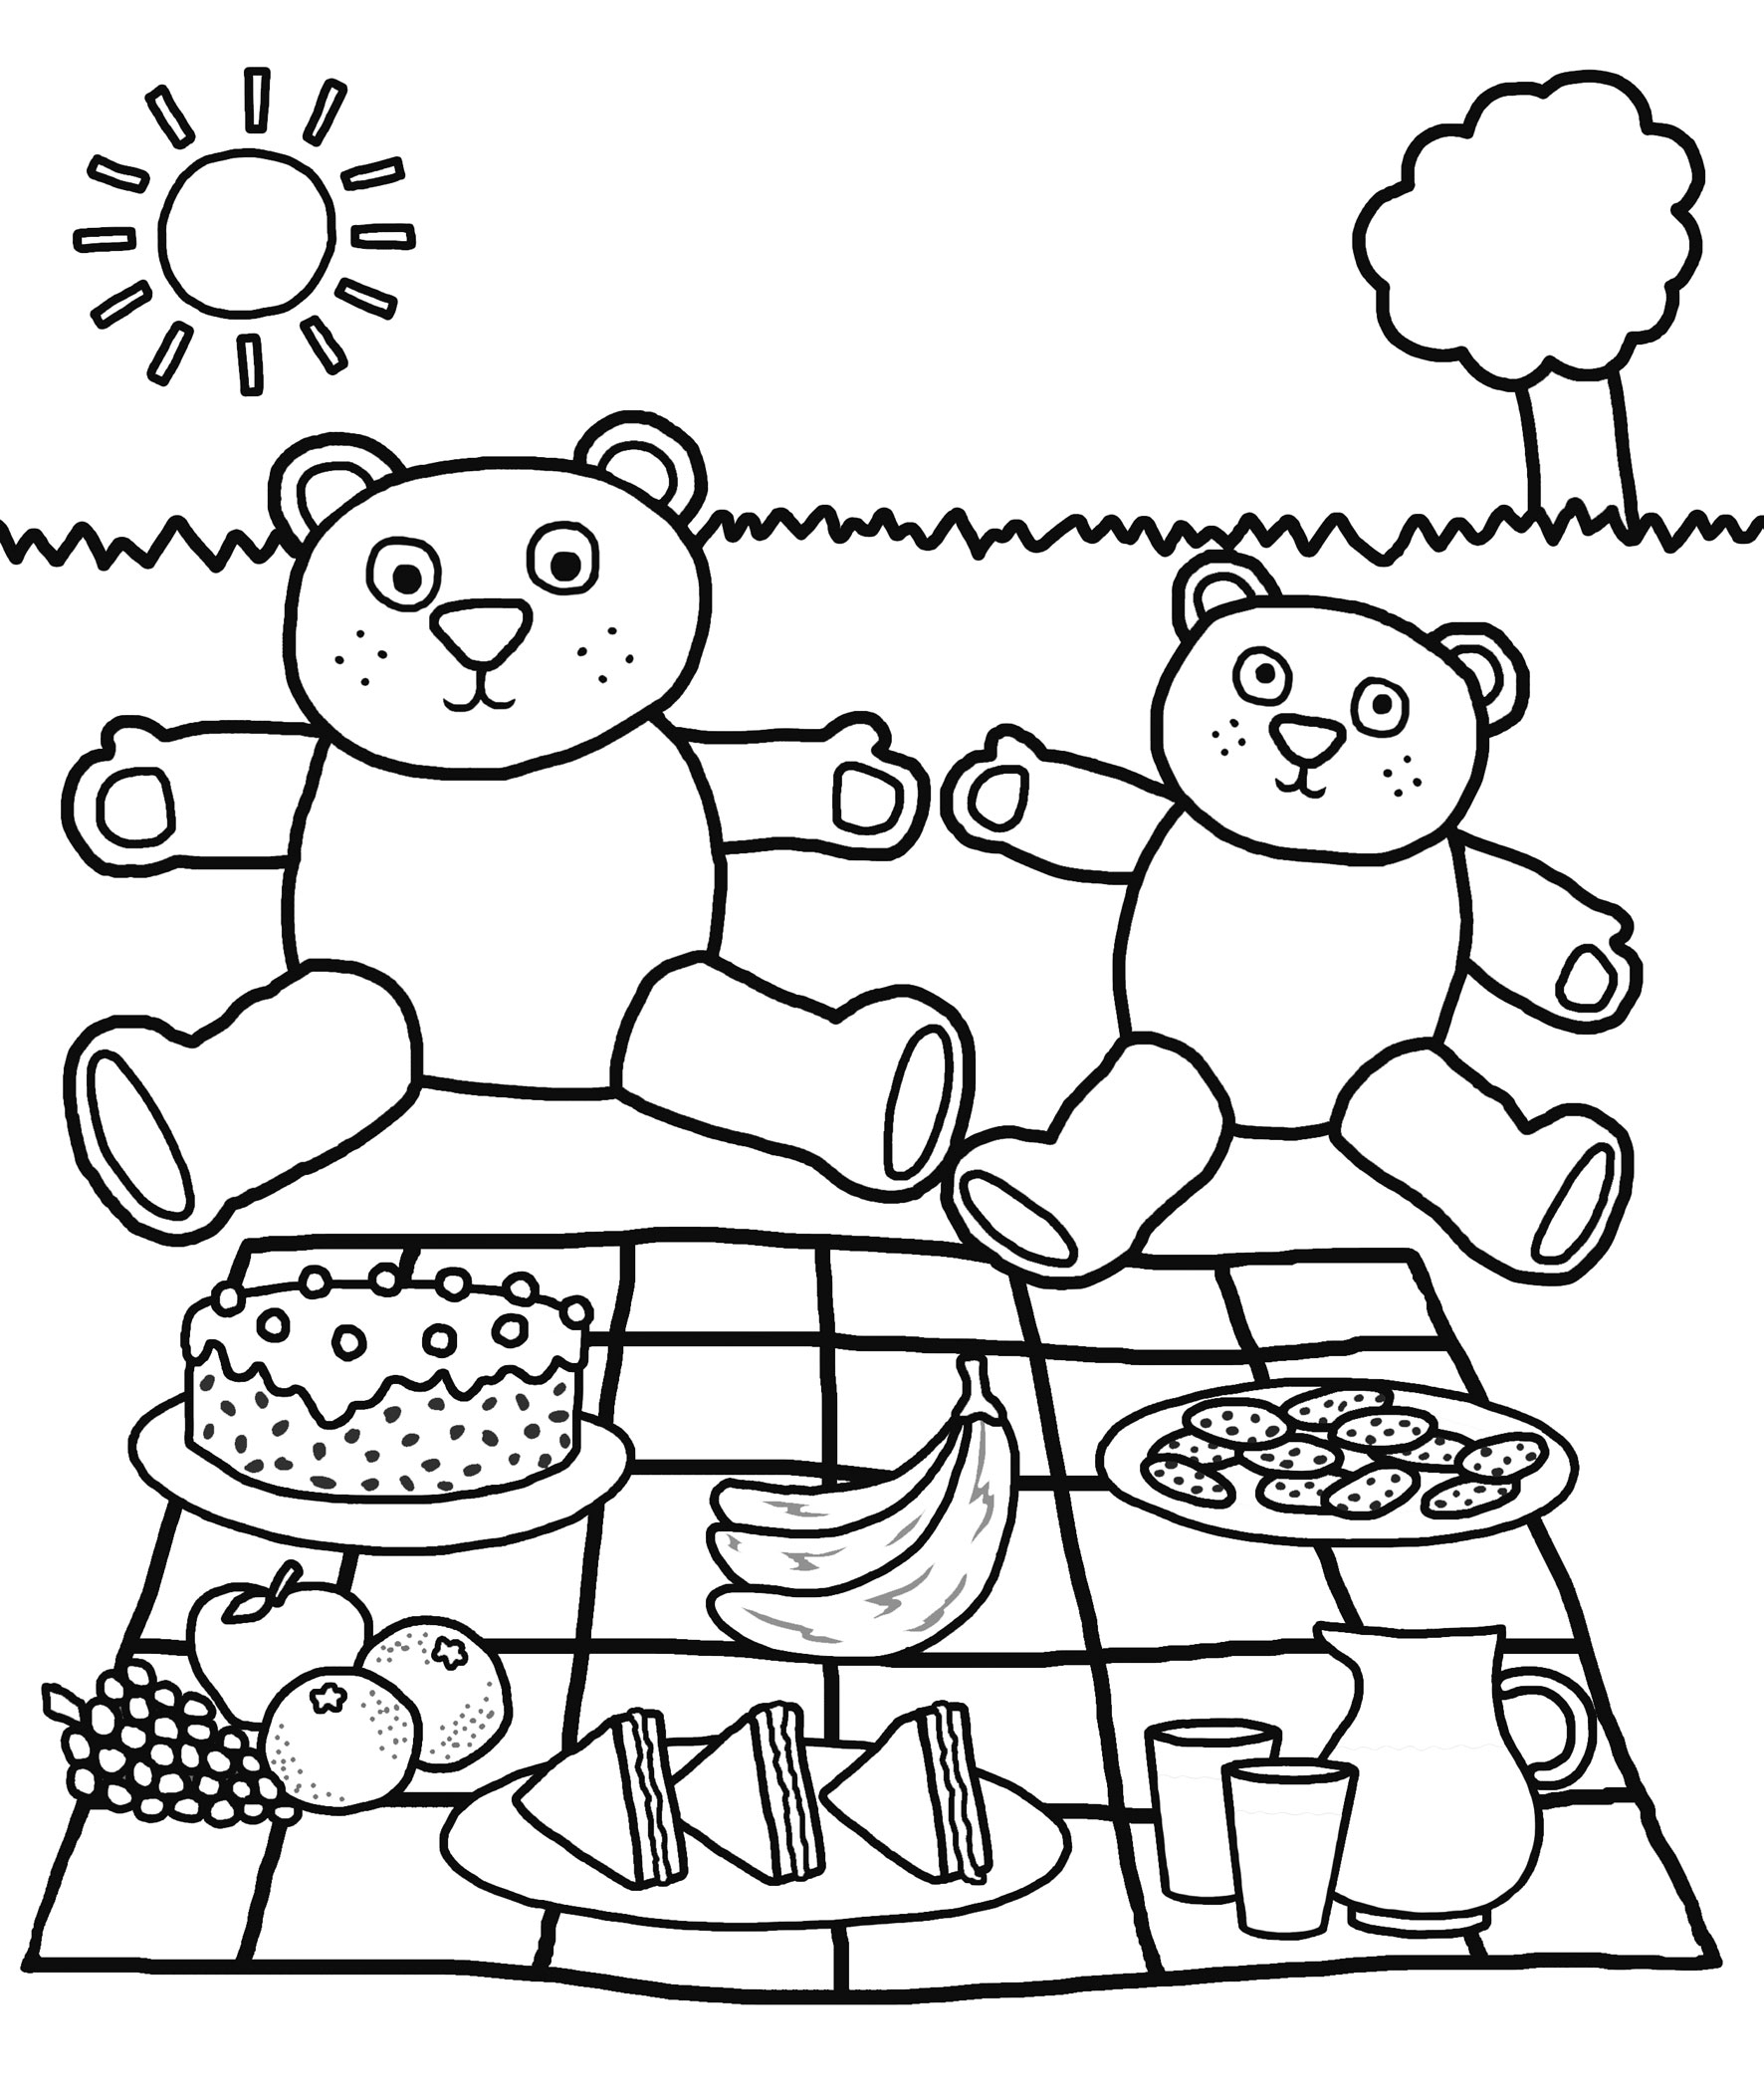 Kindergarten Coloring Pages